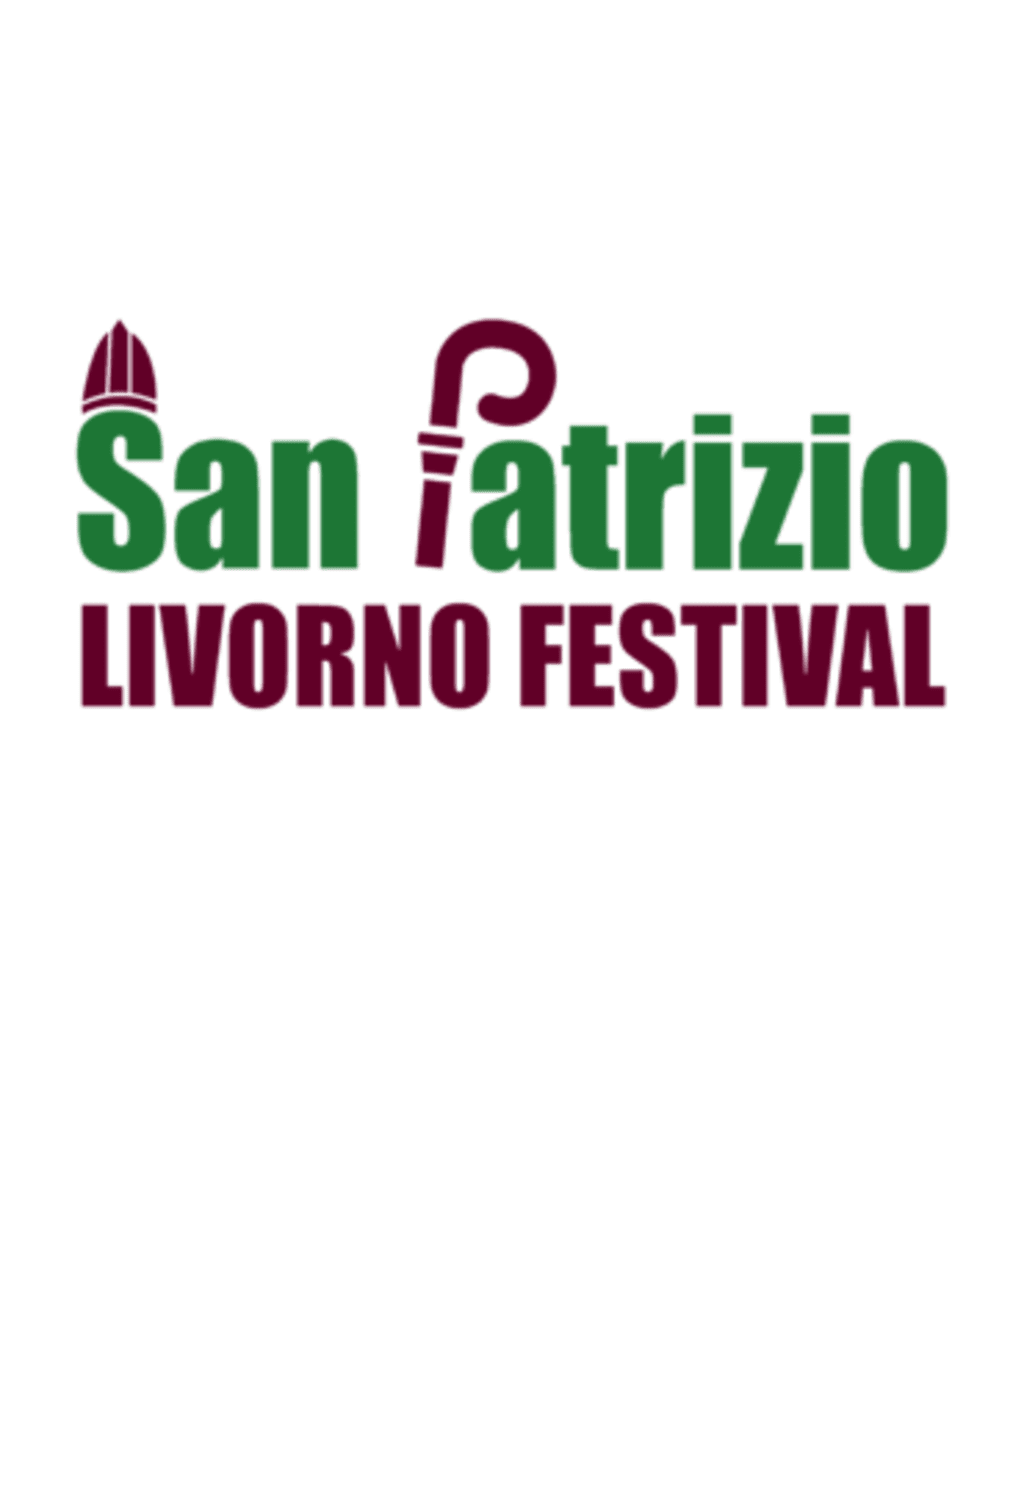 San Patrizio Livorno Festival